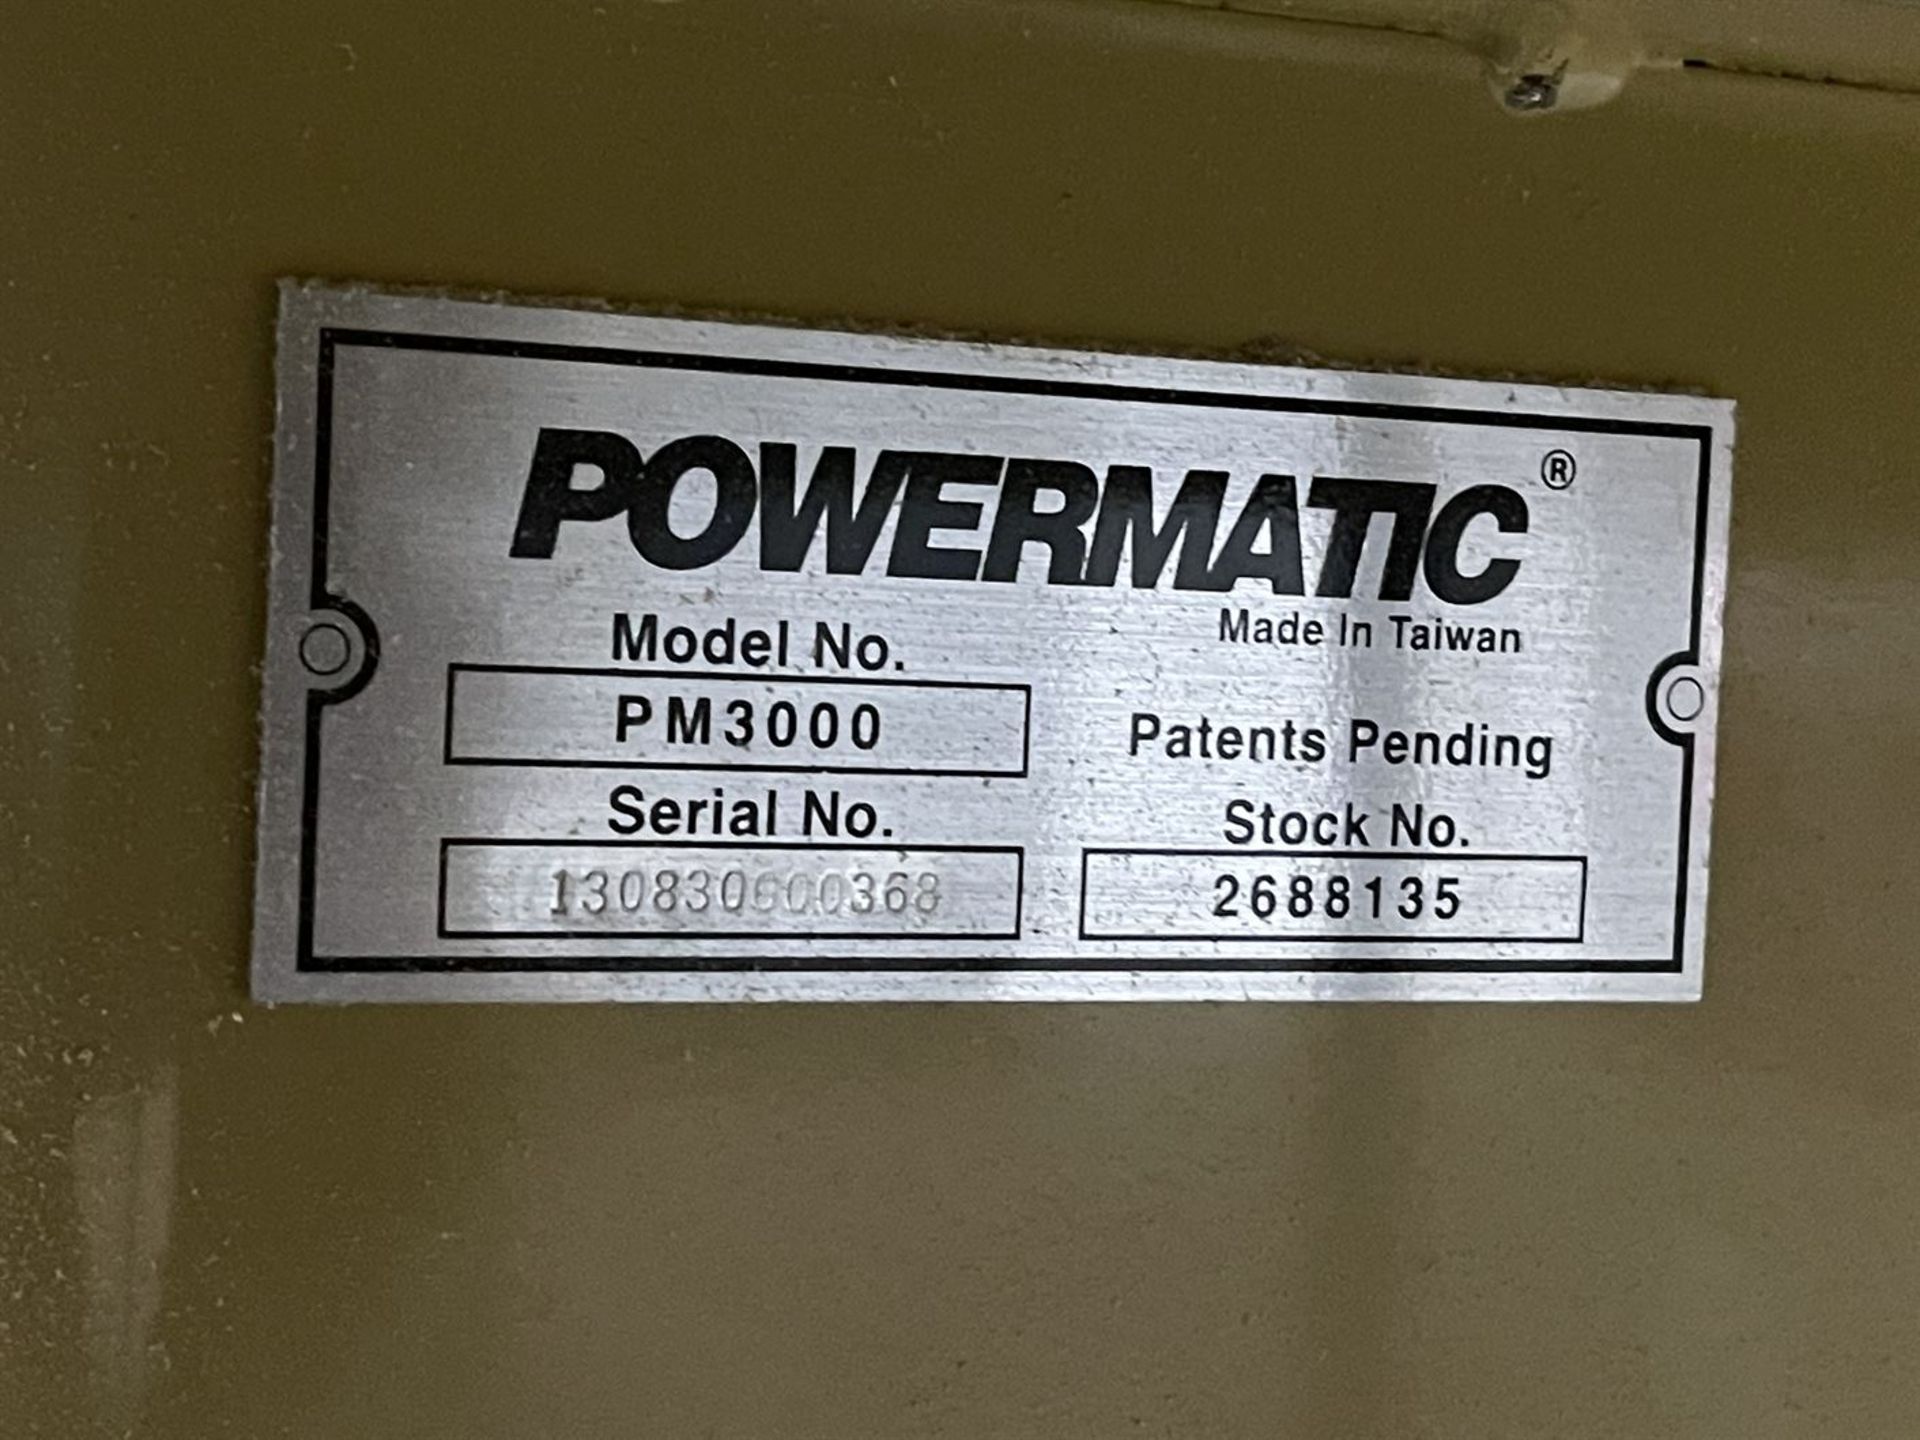 POWERMATIC PM3000 Table Saw, s/n 130830000368 - Image 4 of 4